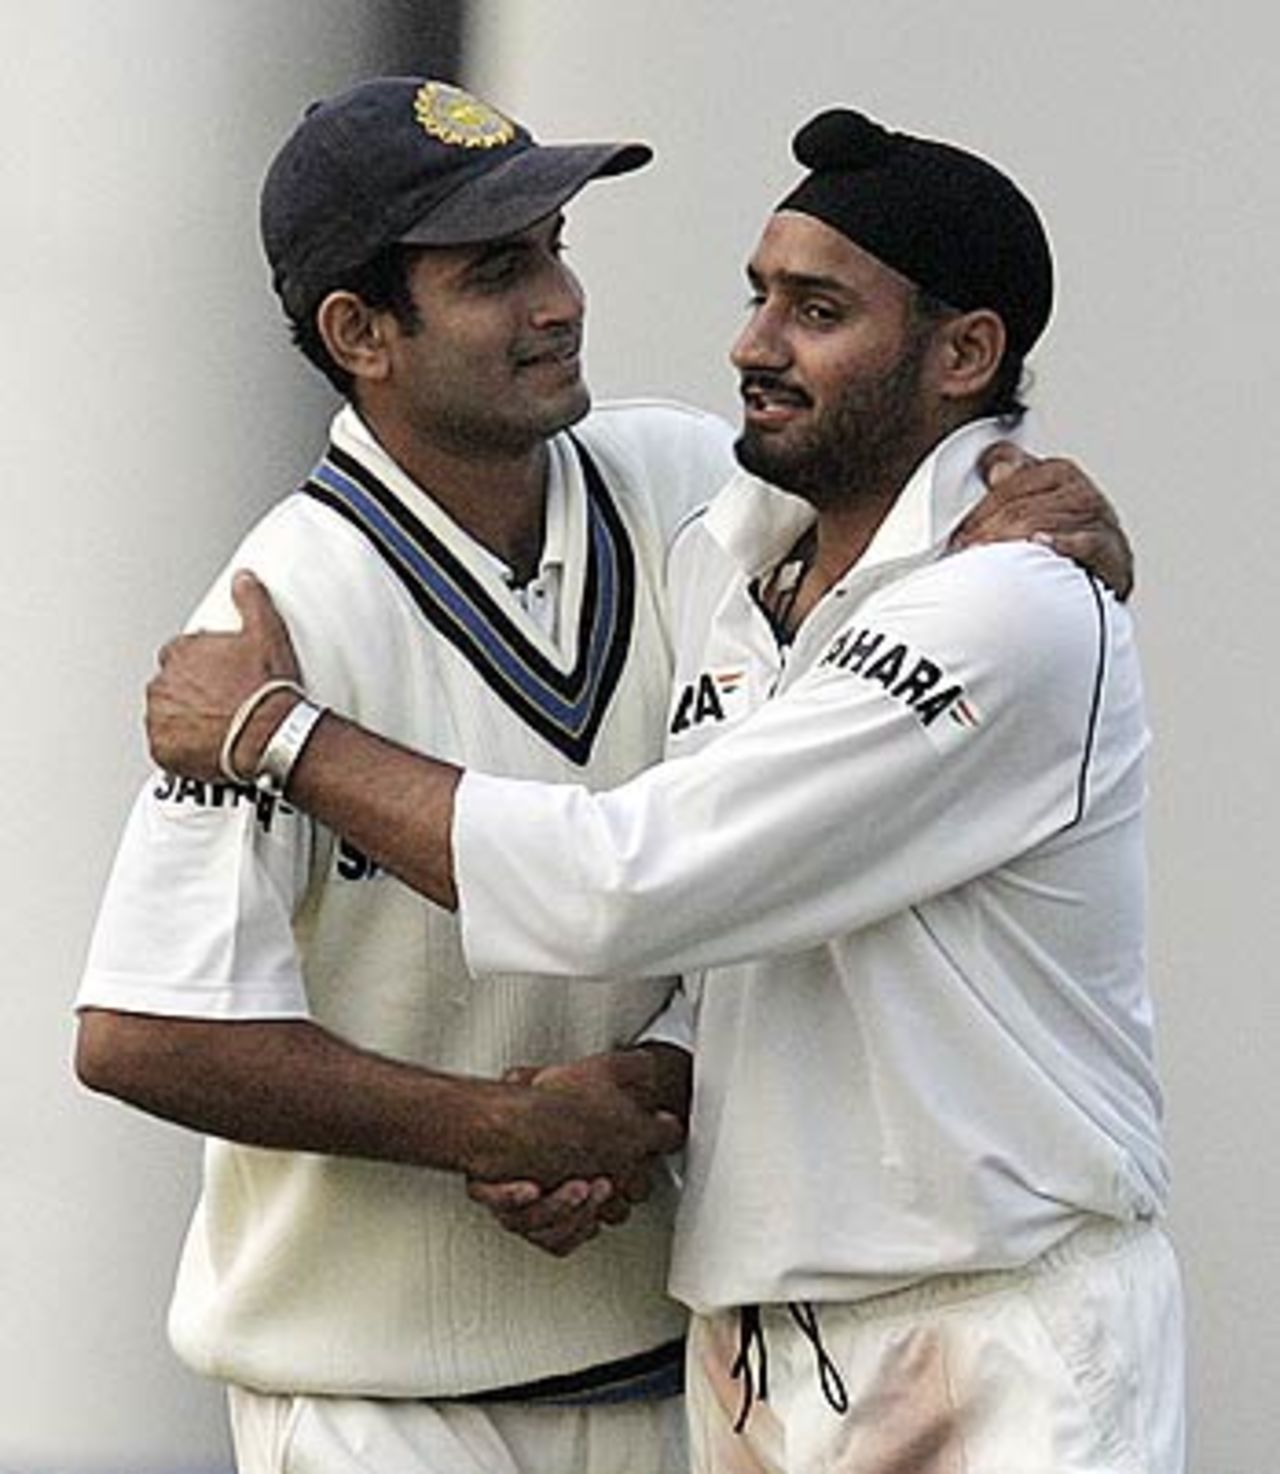 Irfan Pathan congratulates Harbhajan Singh on the wicket of Thilan Samaraweera, India v Sri Lanka, 2nd Test, Delhi, 3rd day, December 13, 2005